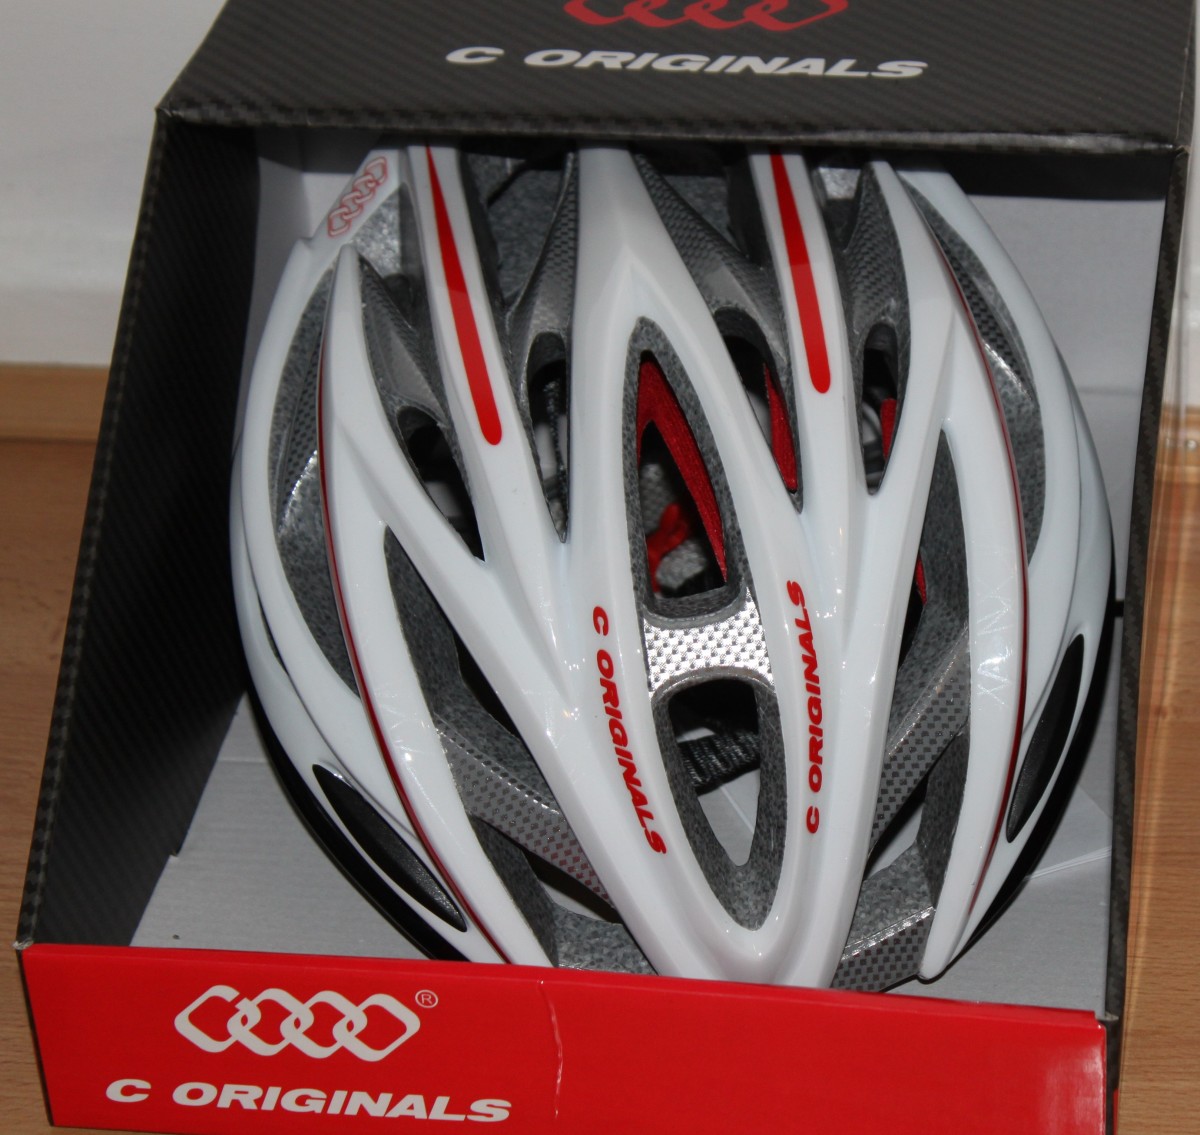 C Originals SV888 Performance Cycling Helmet Review